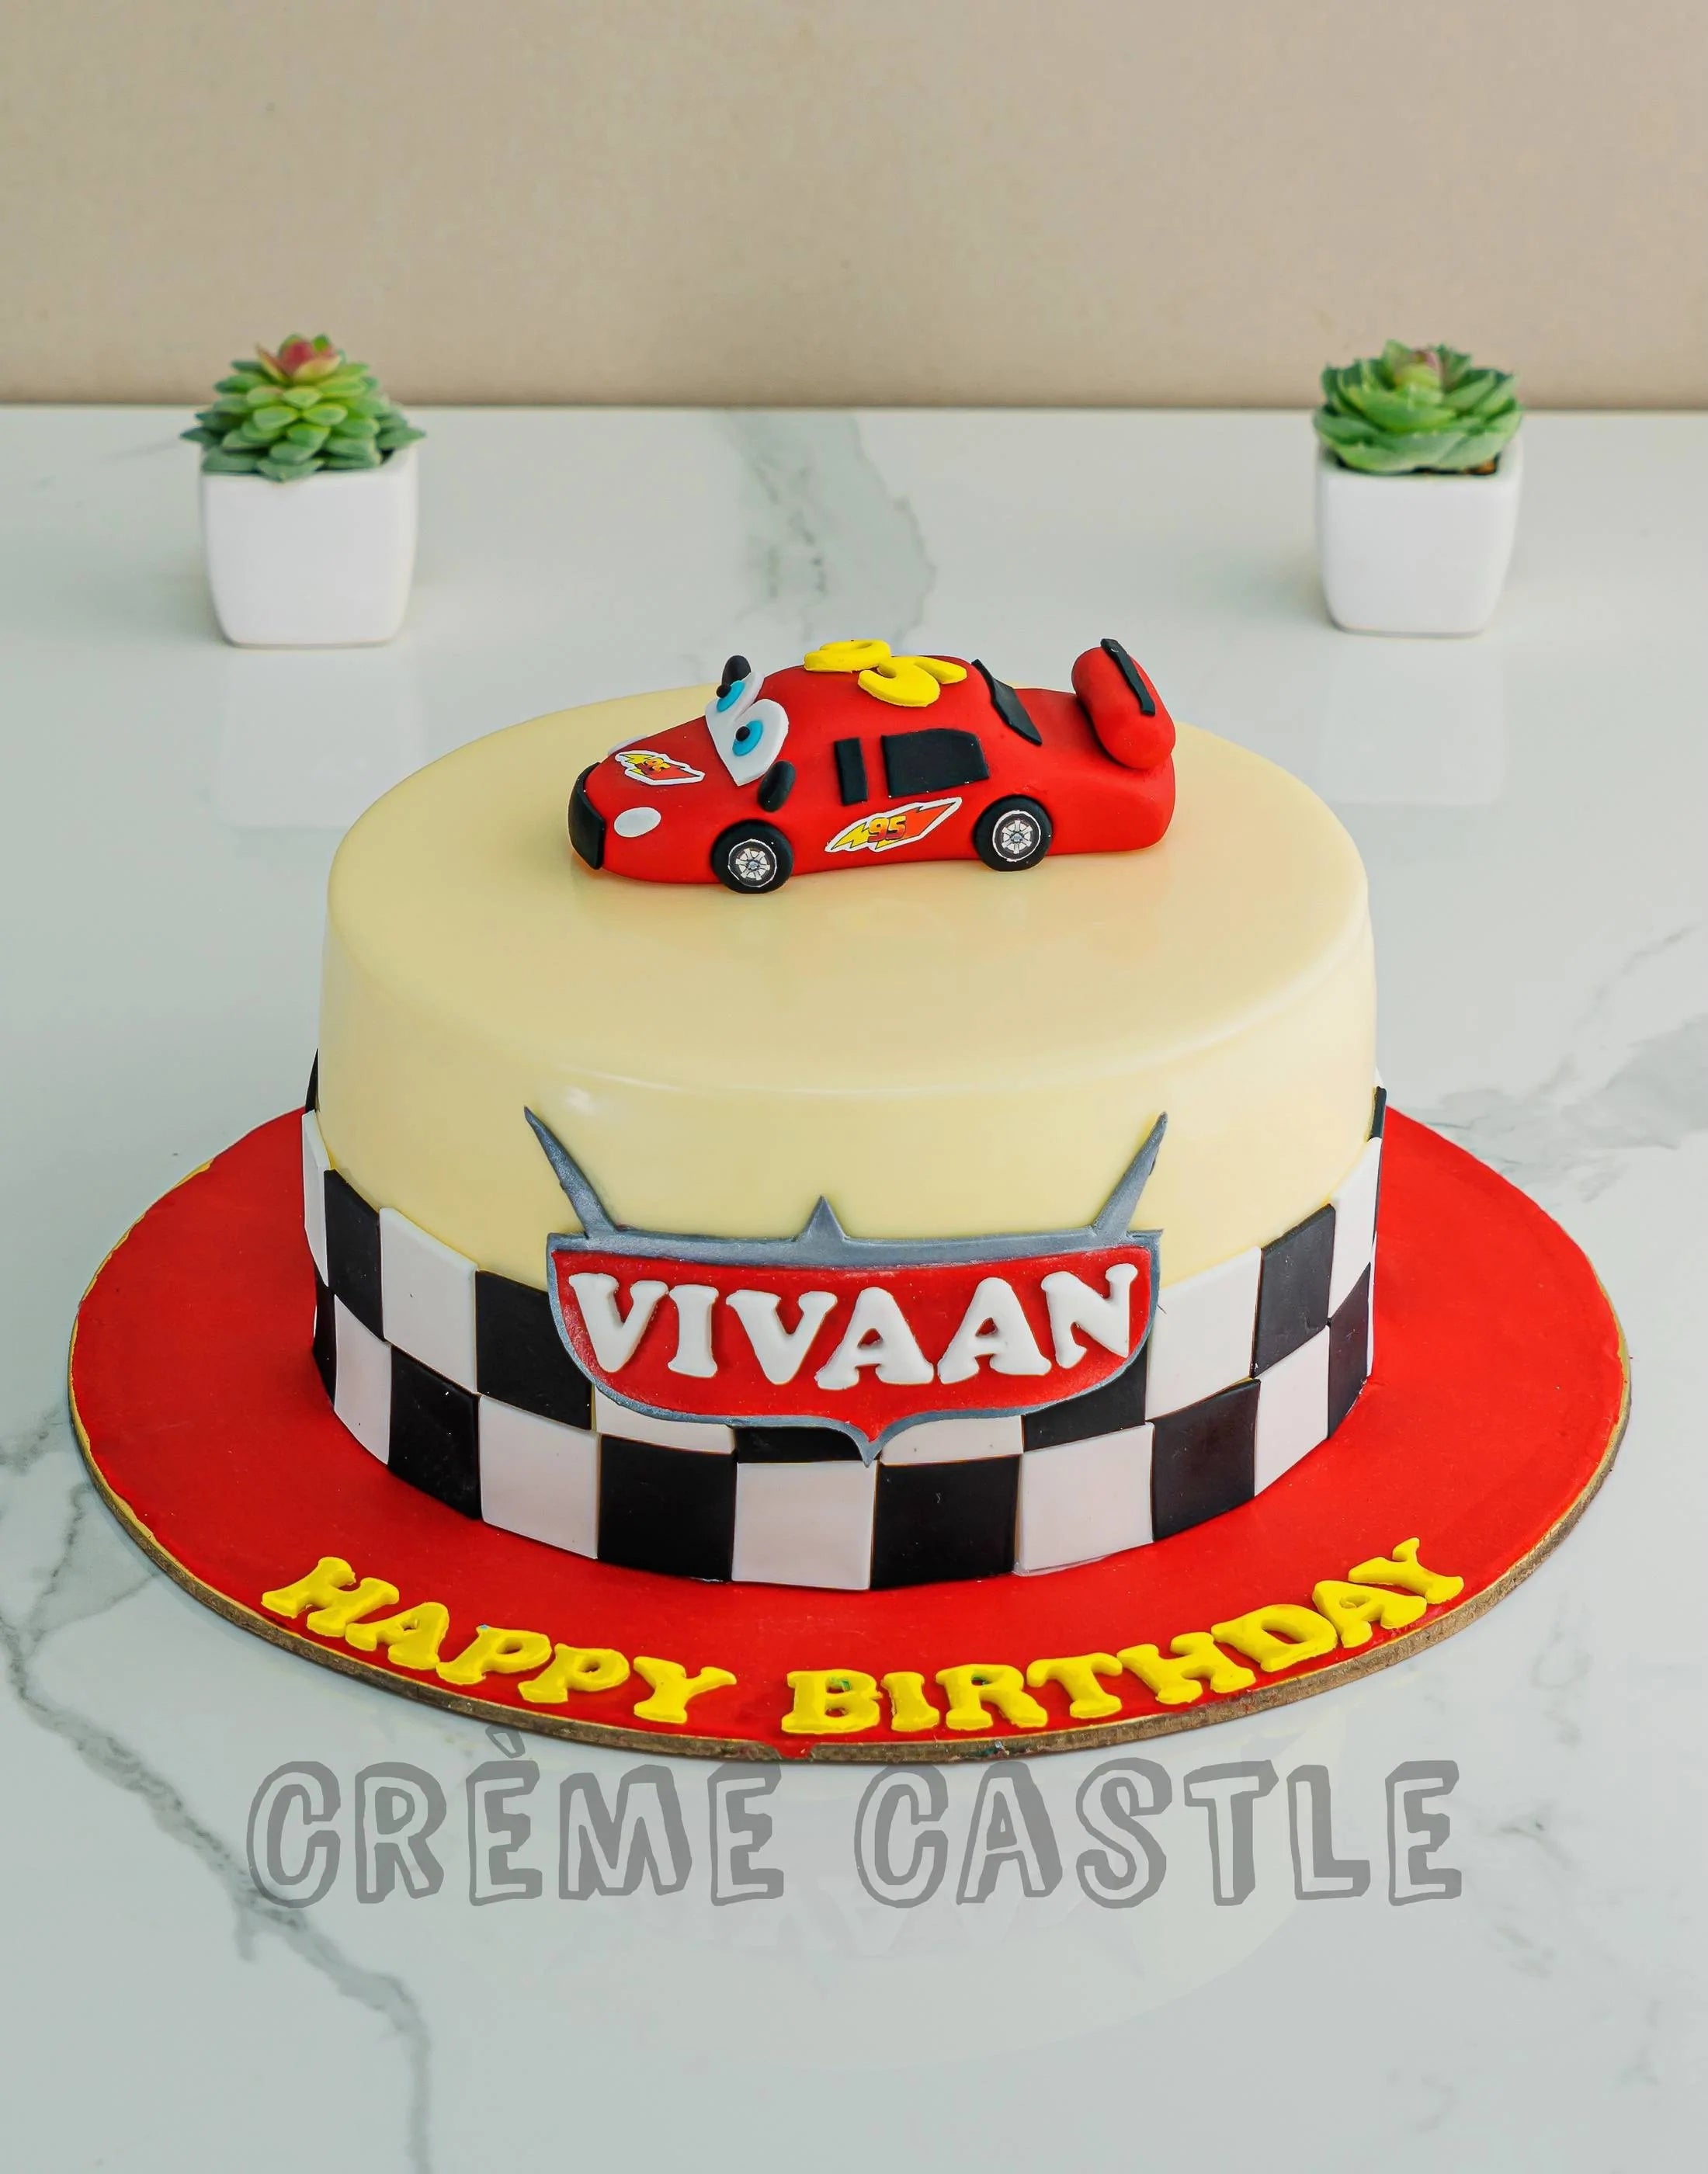 Pixar's 'Cars' Birthday Cake | Michelle Liu | Flickr